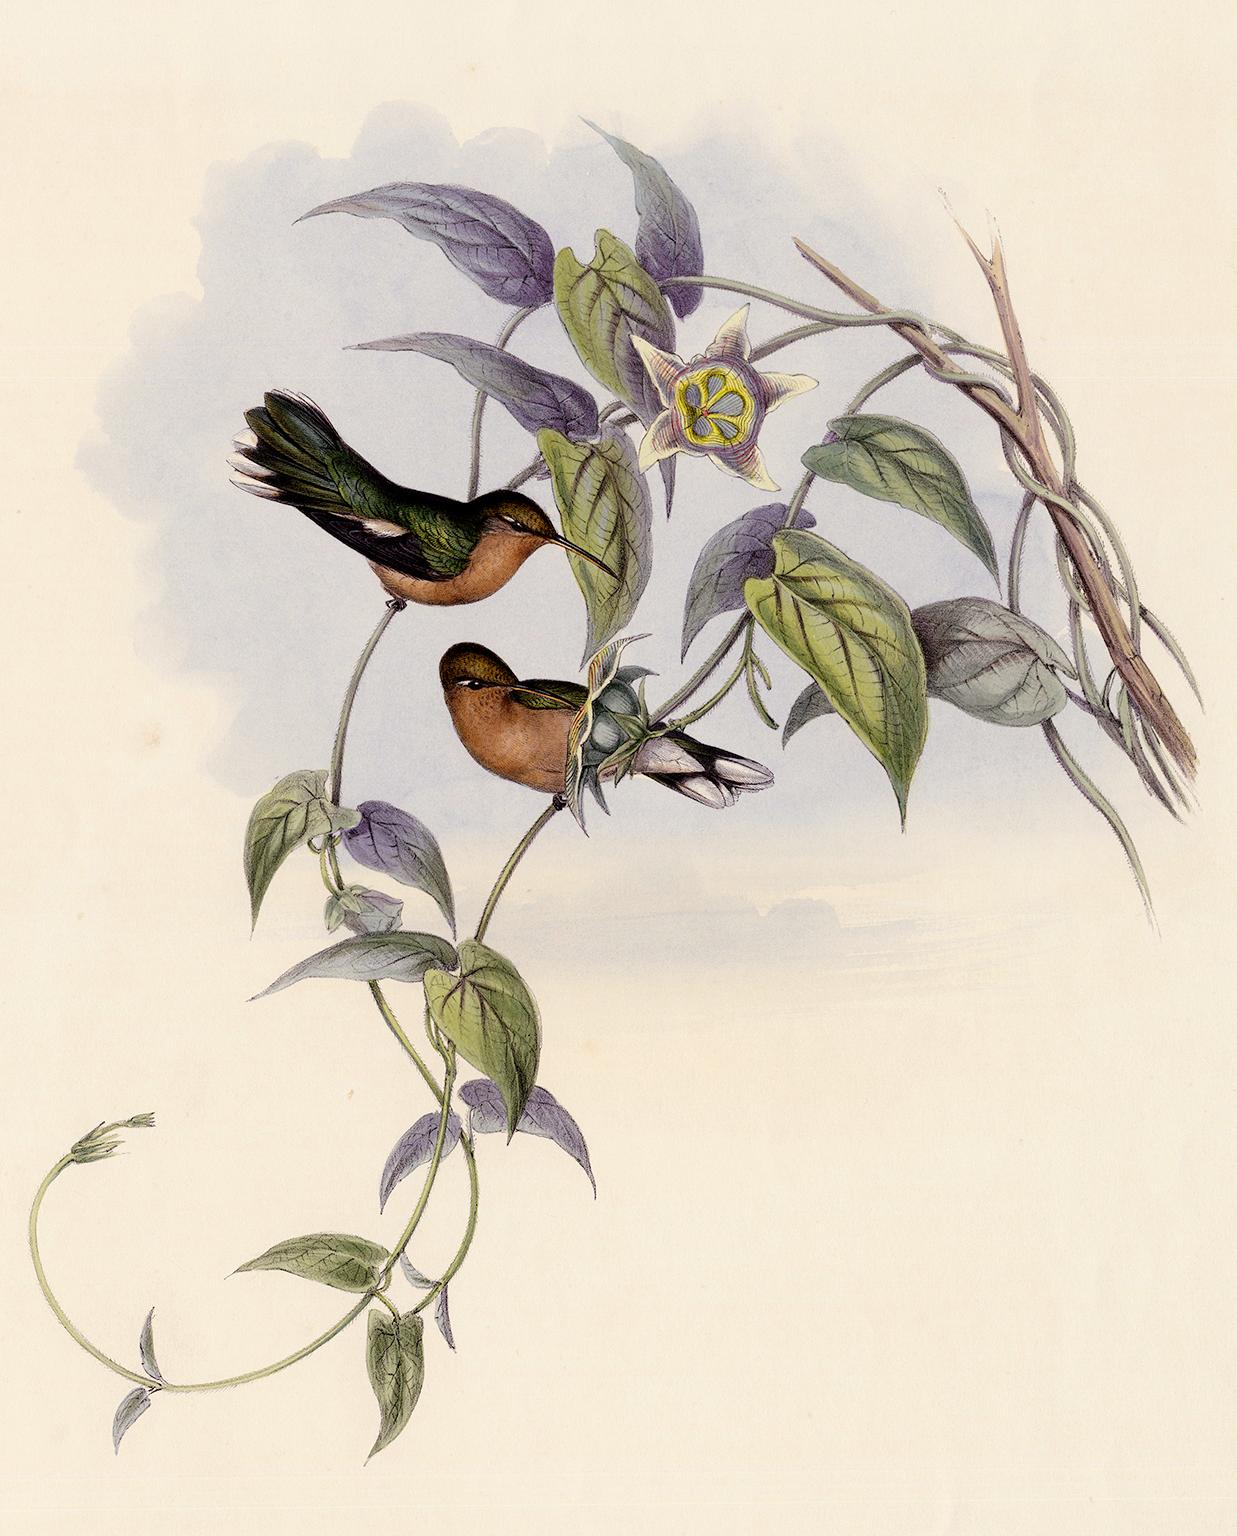 Leucippus Fallax (Buffy Hummingbird) - Original 1849 handkolorierte Lithographie